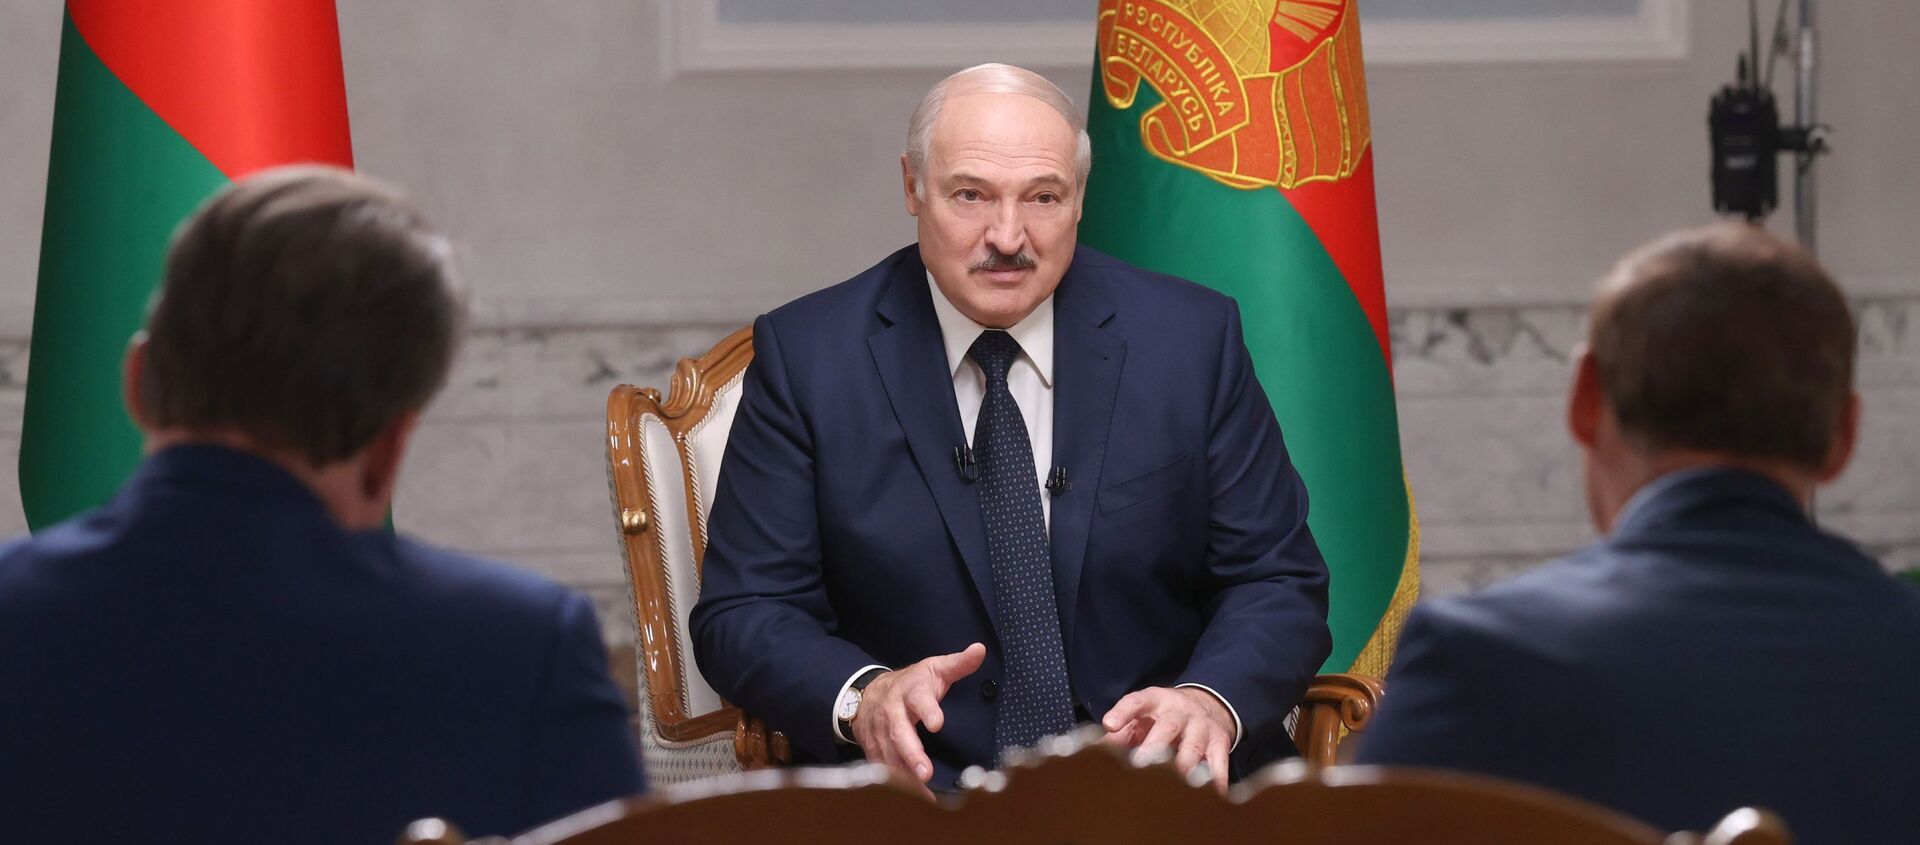 Президент Белоруссии А. Лукашенко дал интервью российским журналистам - Sputnik Таджикистан, 1920, 08.09.2020